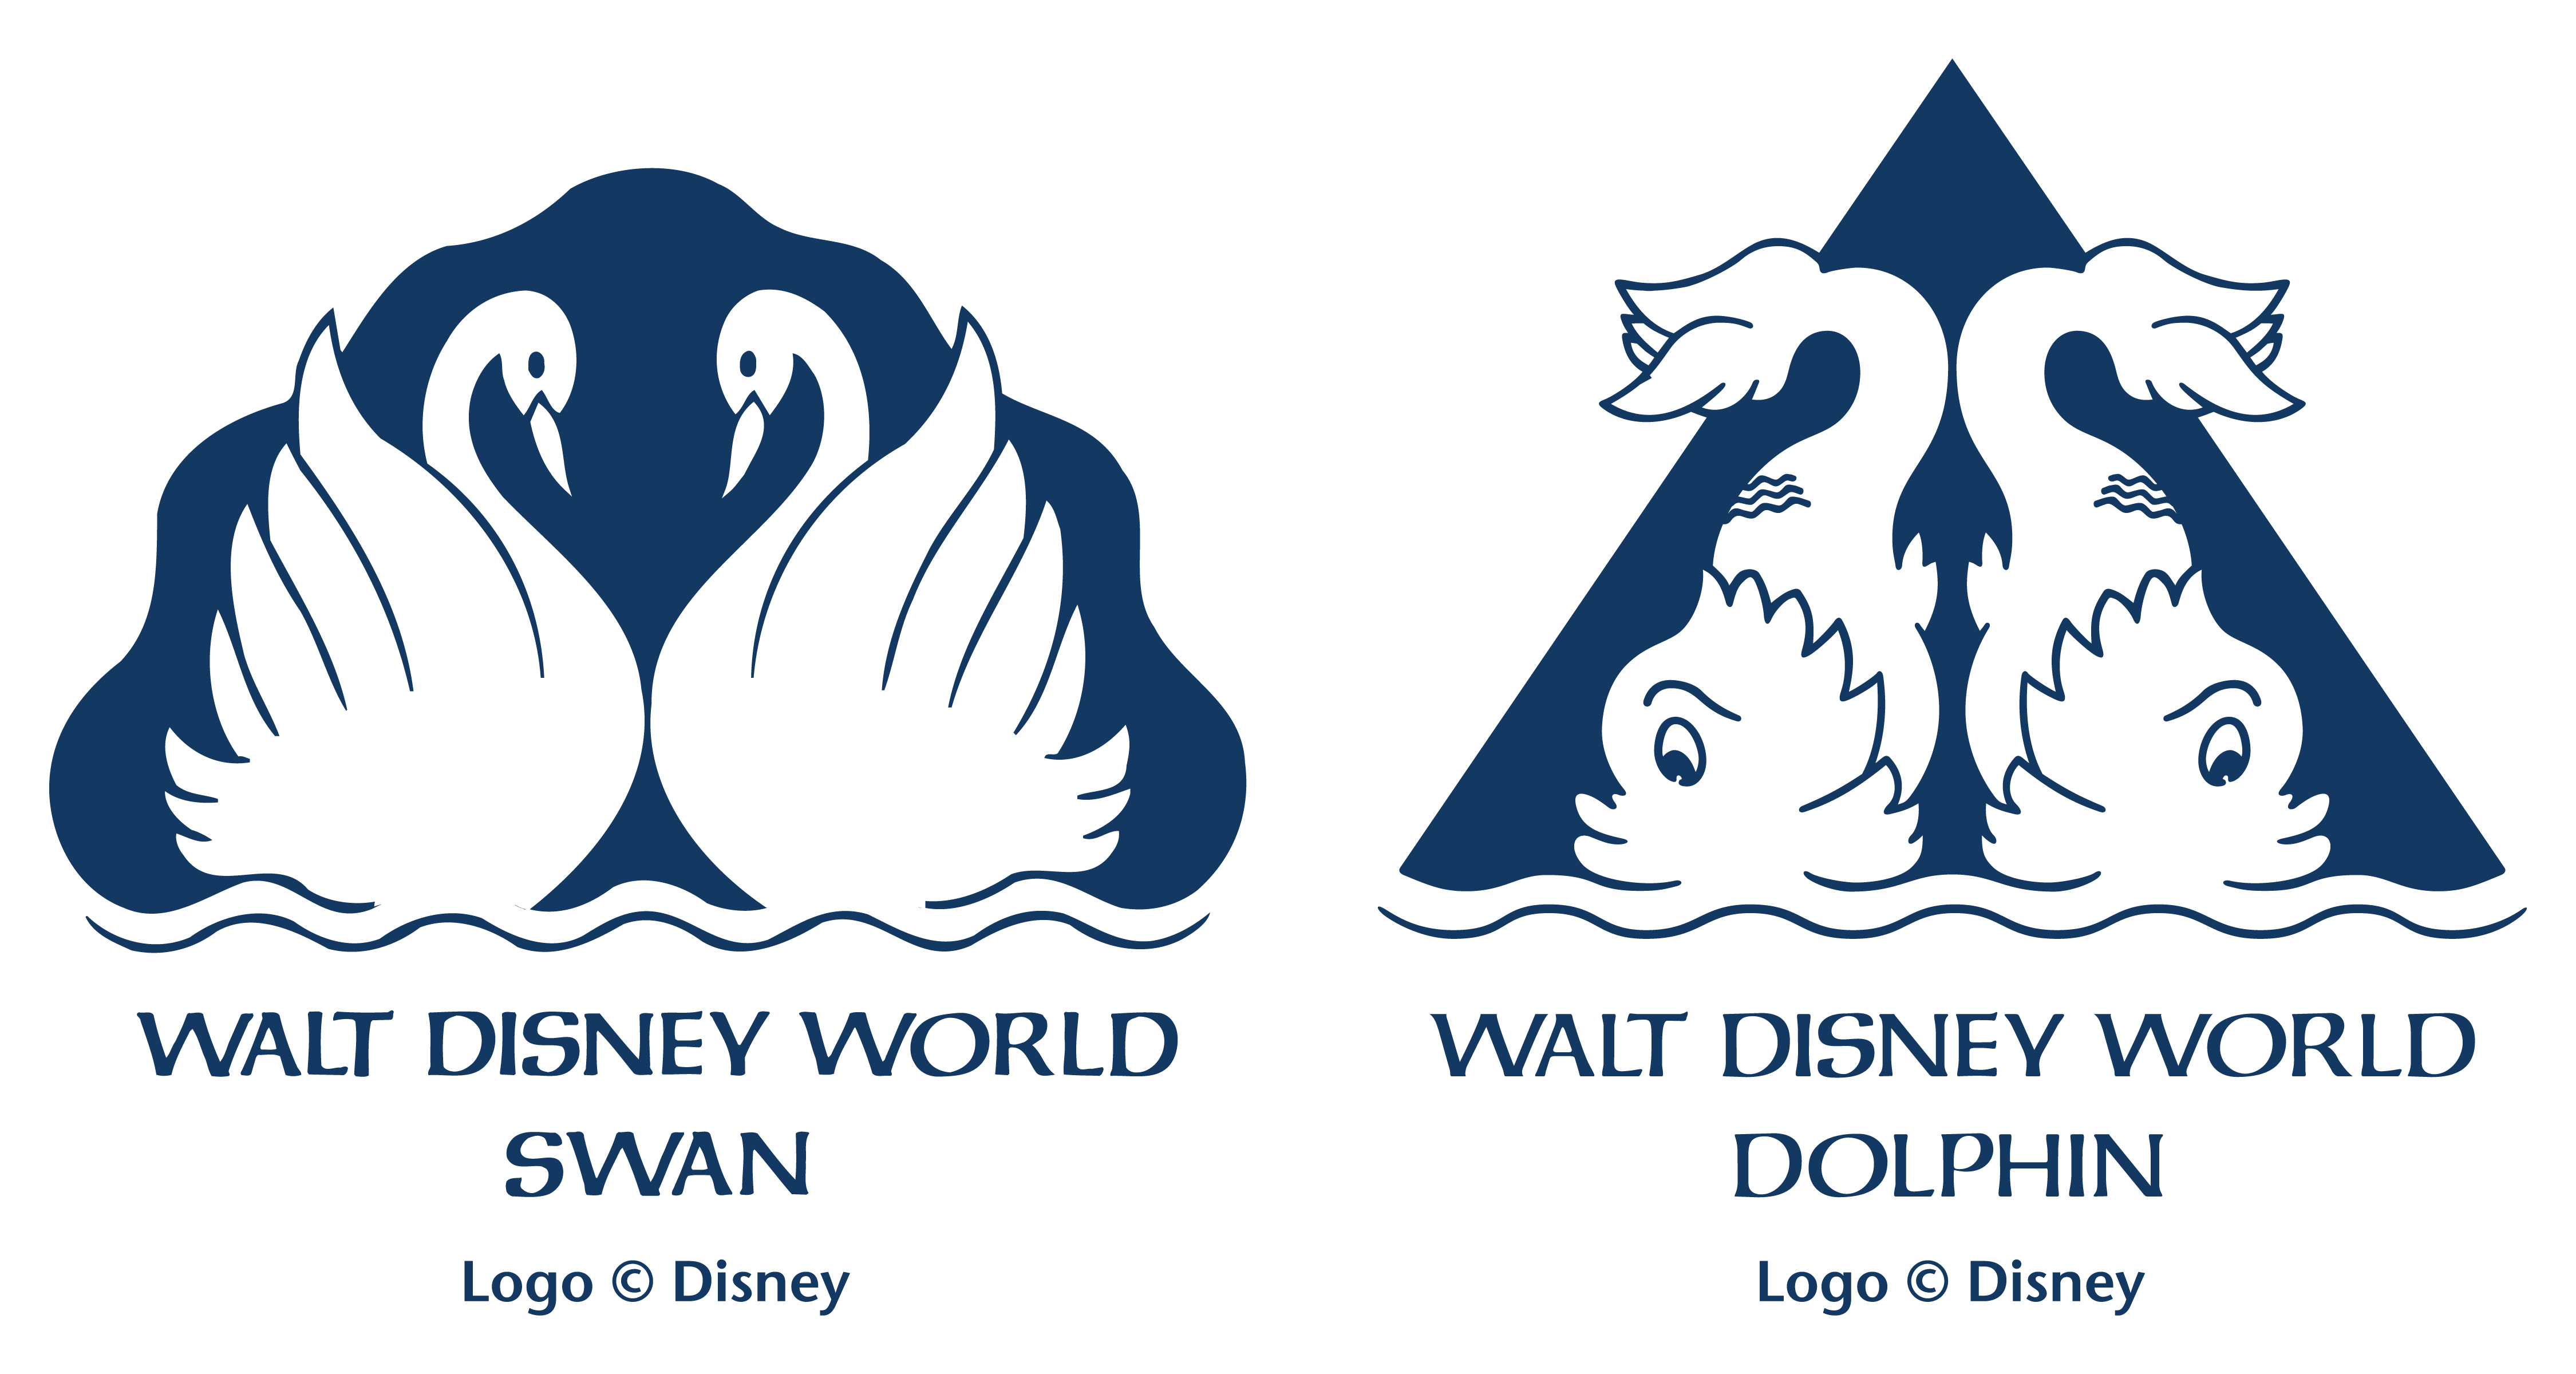 New Walt Disney World Logo - Logos - Walt Disney World Swan and Dolphin - Media Site